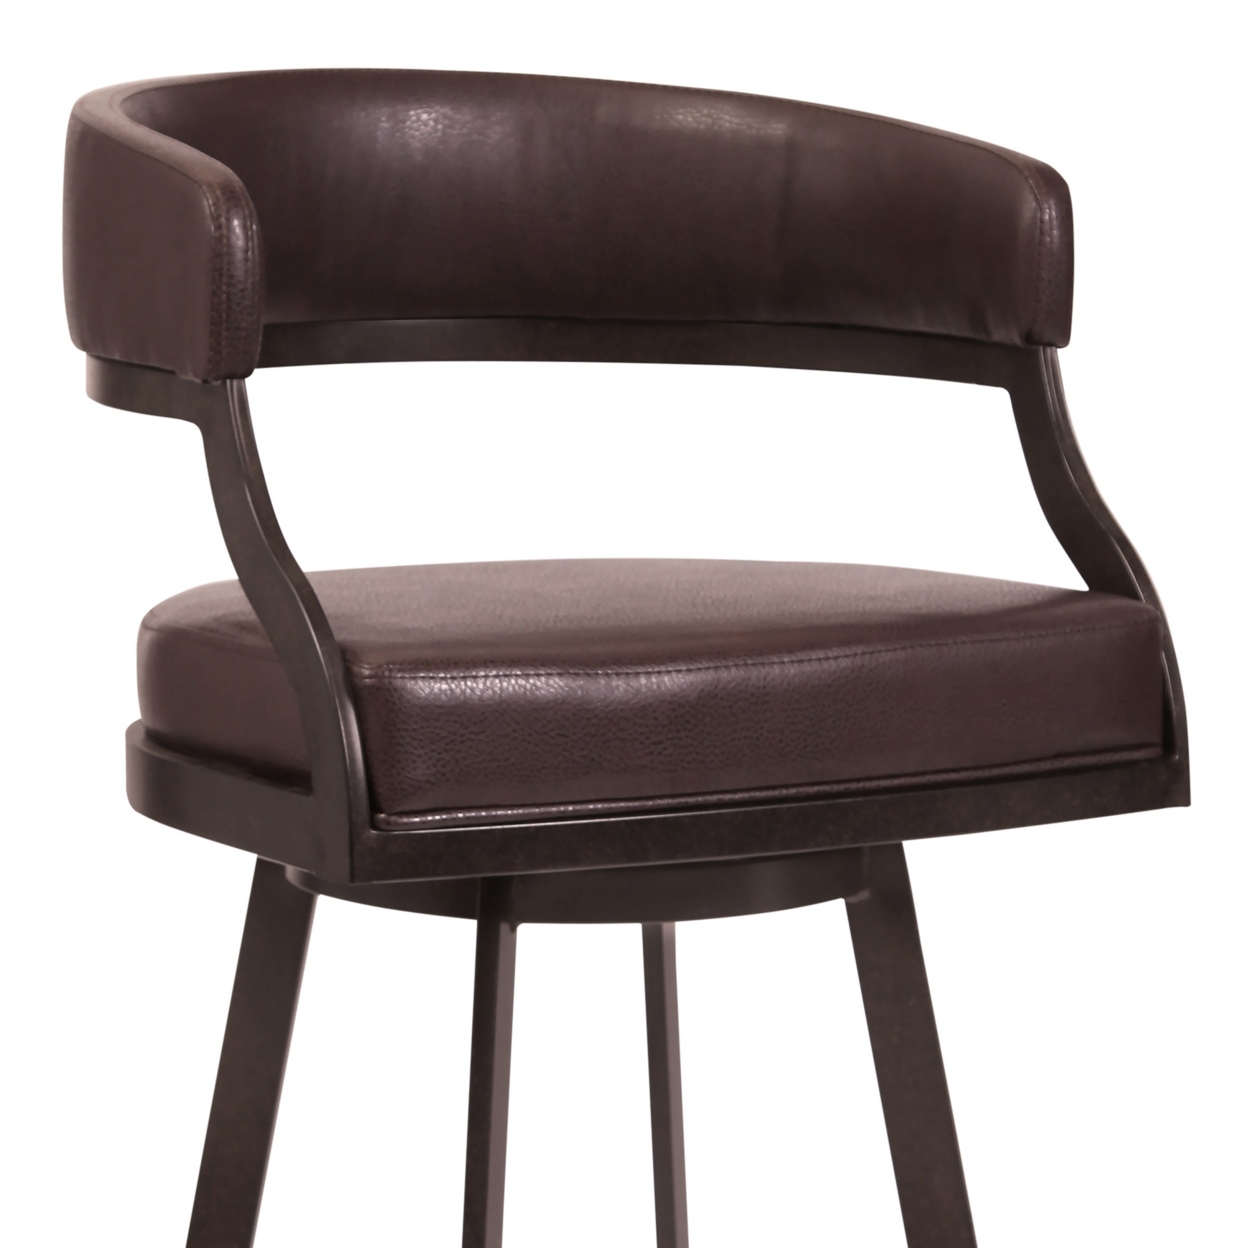 Ava 30 Inch Swivel Bar Stool Chair, Curved, Faux Leather, Auburn Brown- Saltoro Sherpi